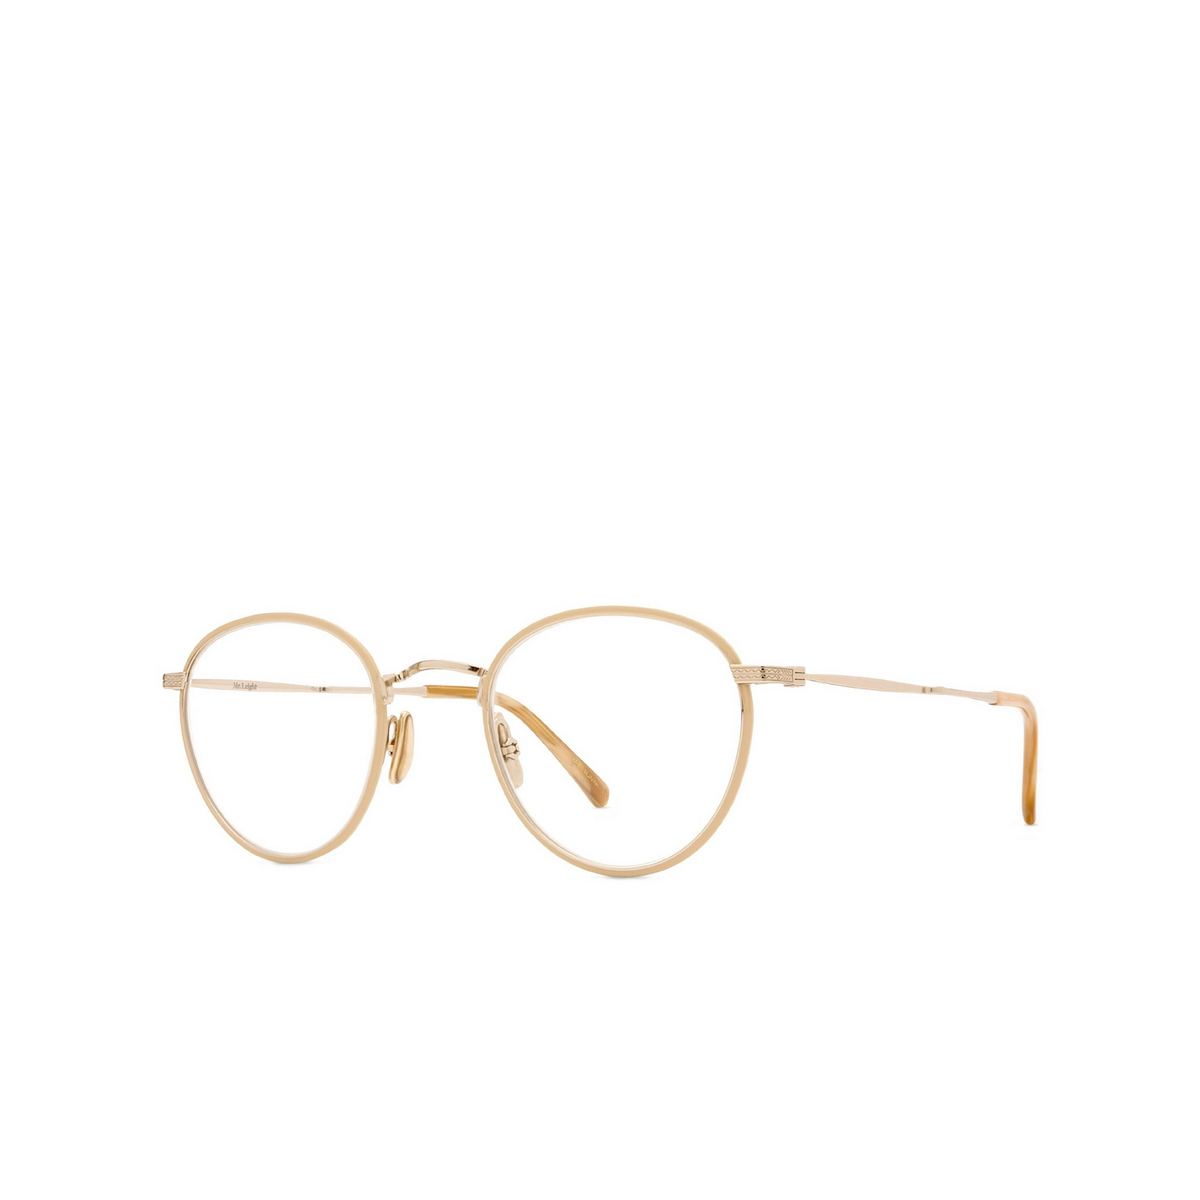 Mr. Leight CARLYLE C Eyeglasses IV-12KG Ivory-12K White Gold - three-quarters view